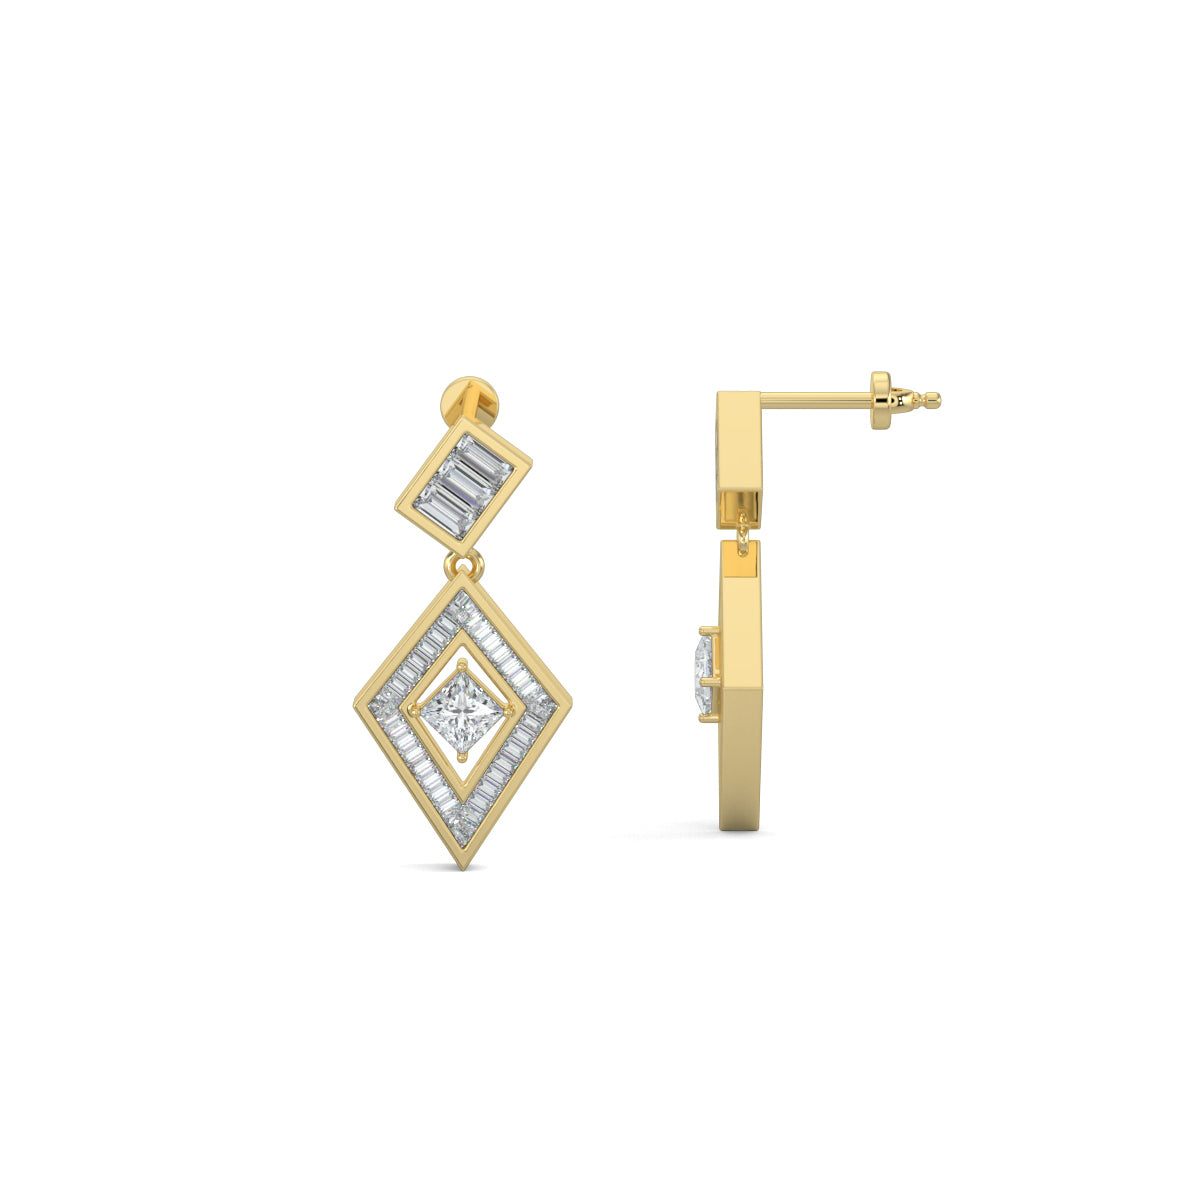 Yellow Gold, Diamond Earrings, Natural diamond earrings, Lab-grown diamond earrings, PrismKite Earrings, Mid-length diamond earrings, Baguette-cut diamonds, Princess-cut diamond, Kite-shaped earrings, Modern diamond jewelry, Contemporary earrings, Luxury diamond earrings.